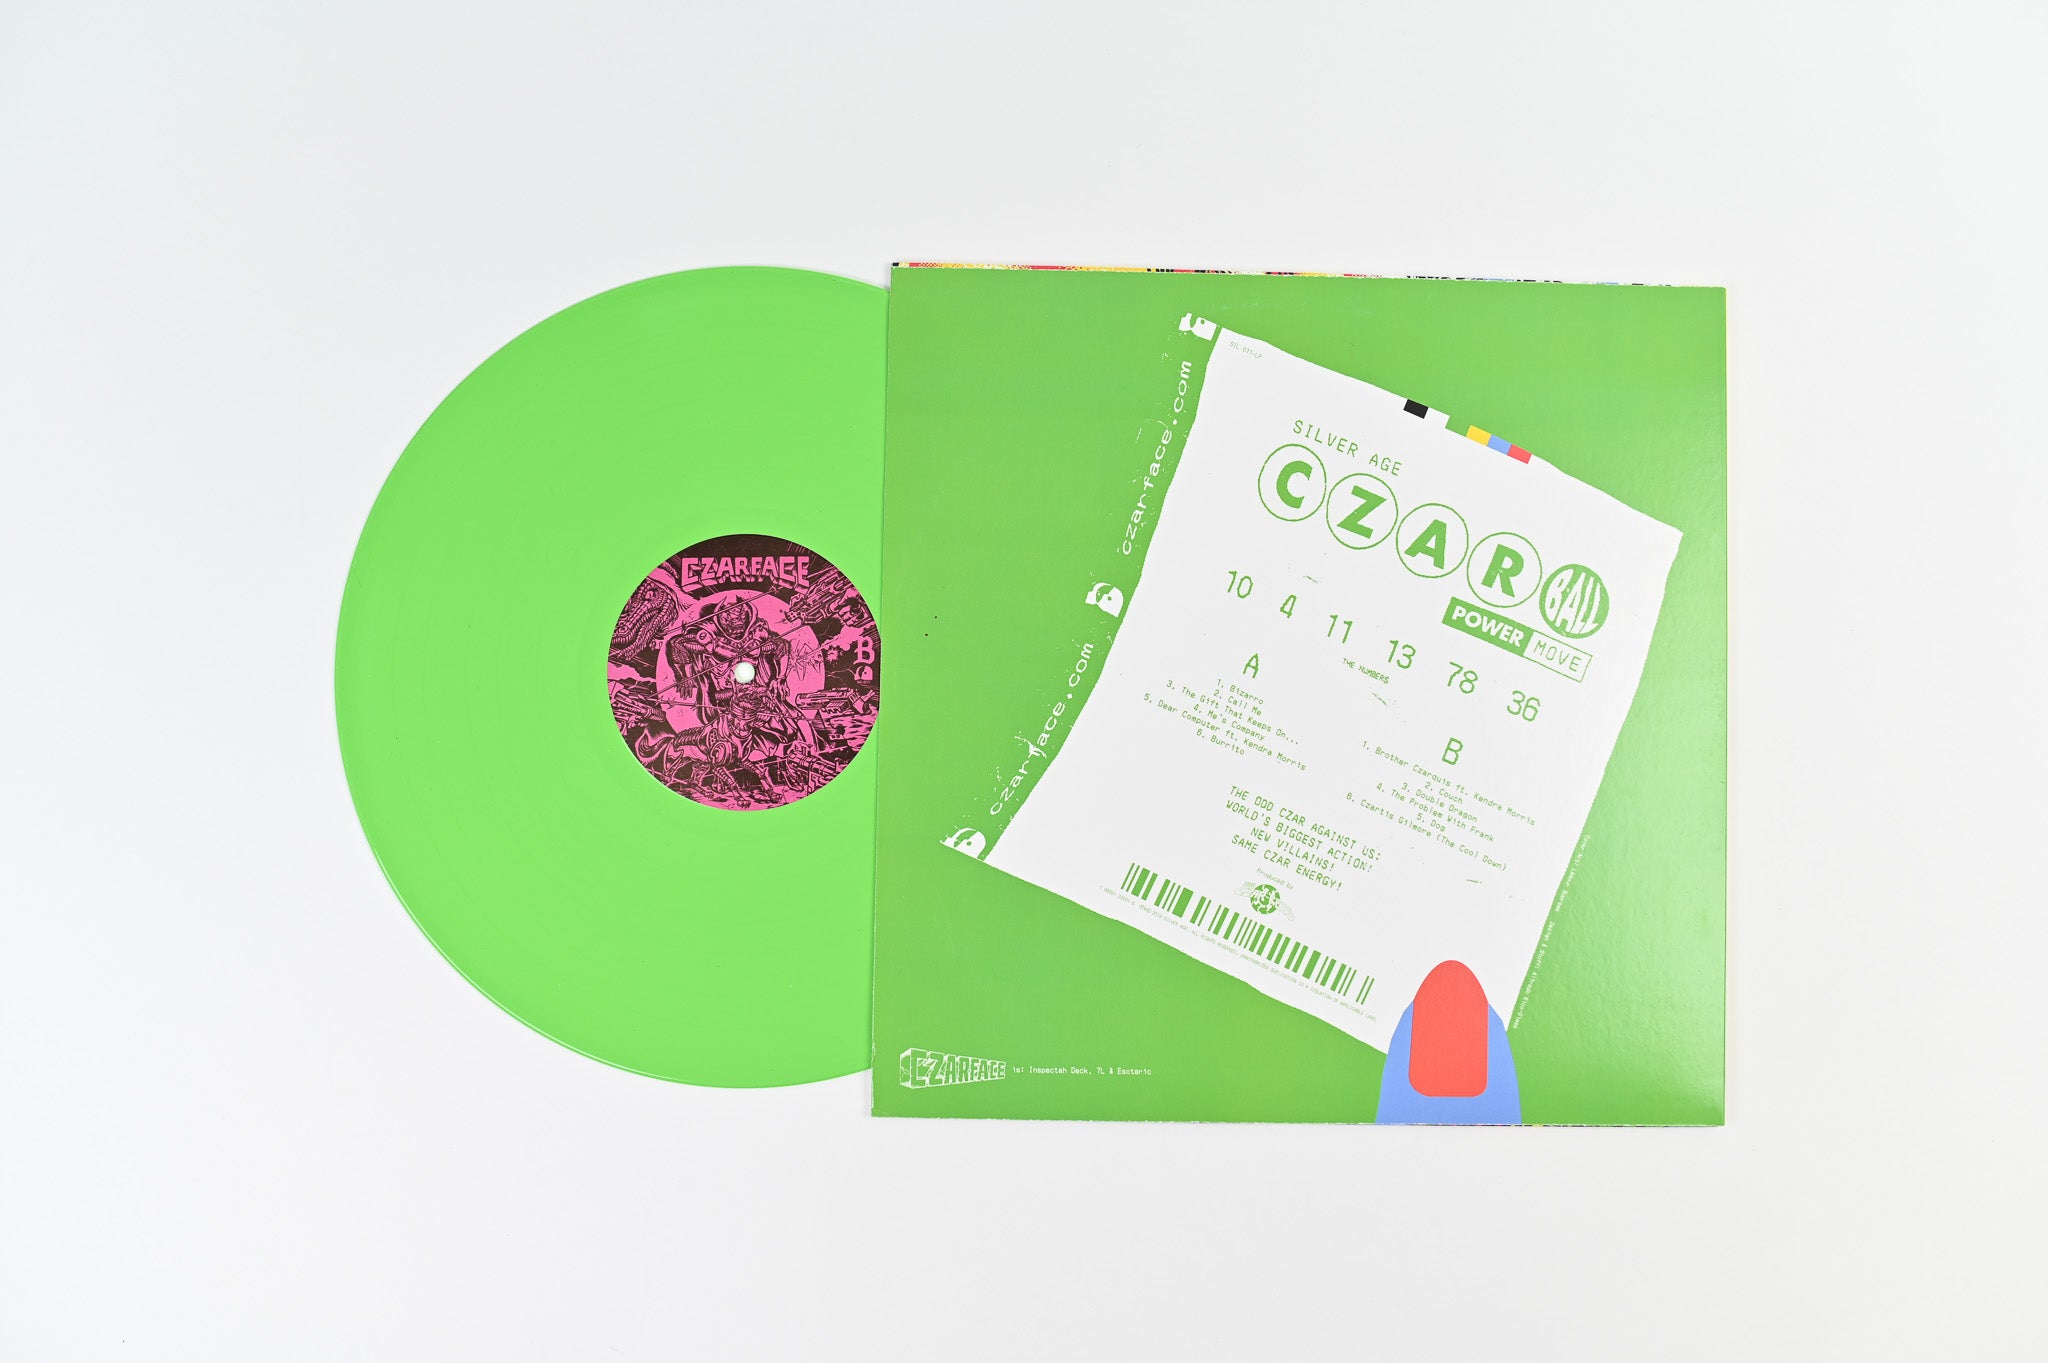 Czarface - The Odd Czar Against Us! on Silver Age Limited Green Vinyl